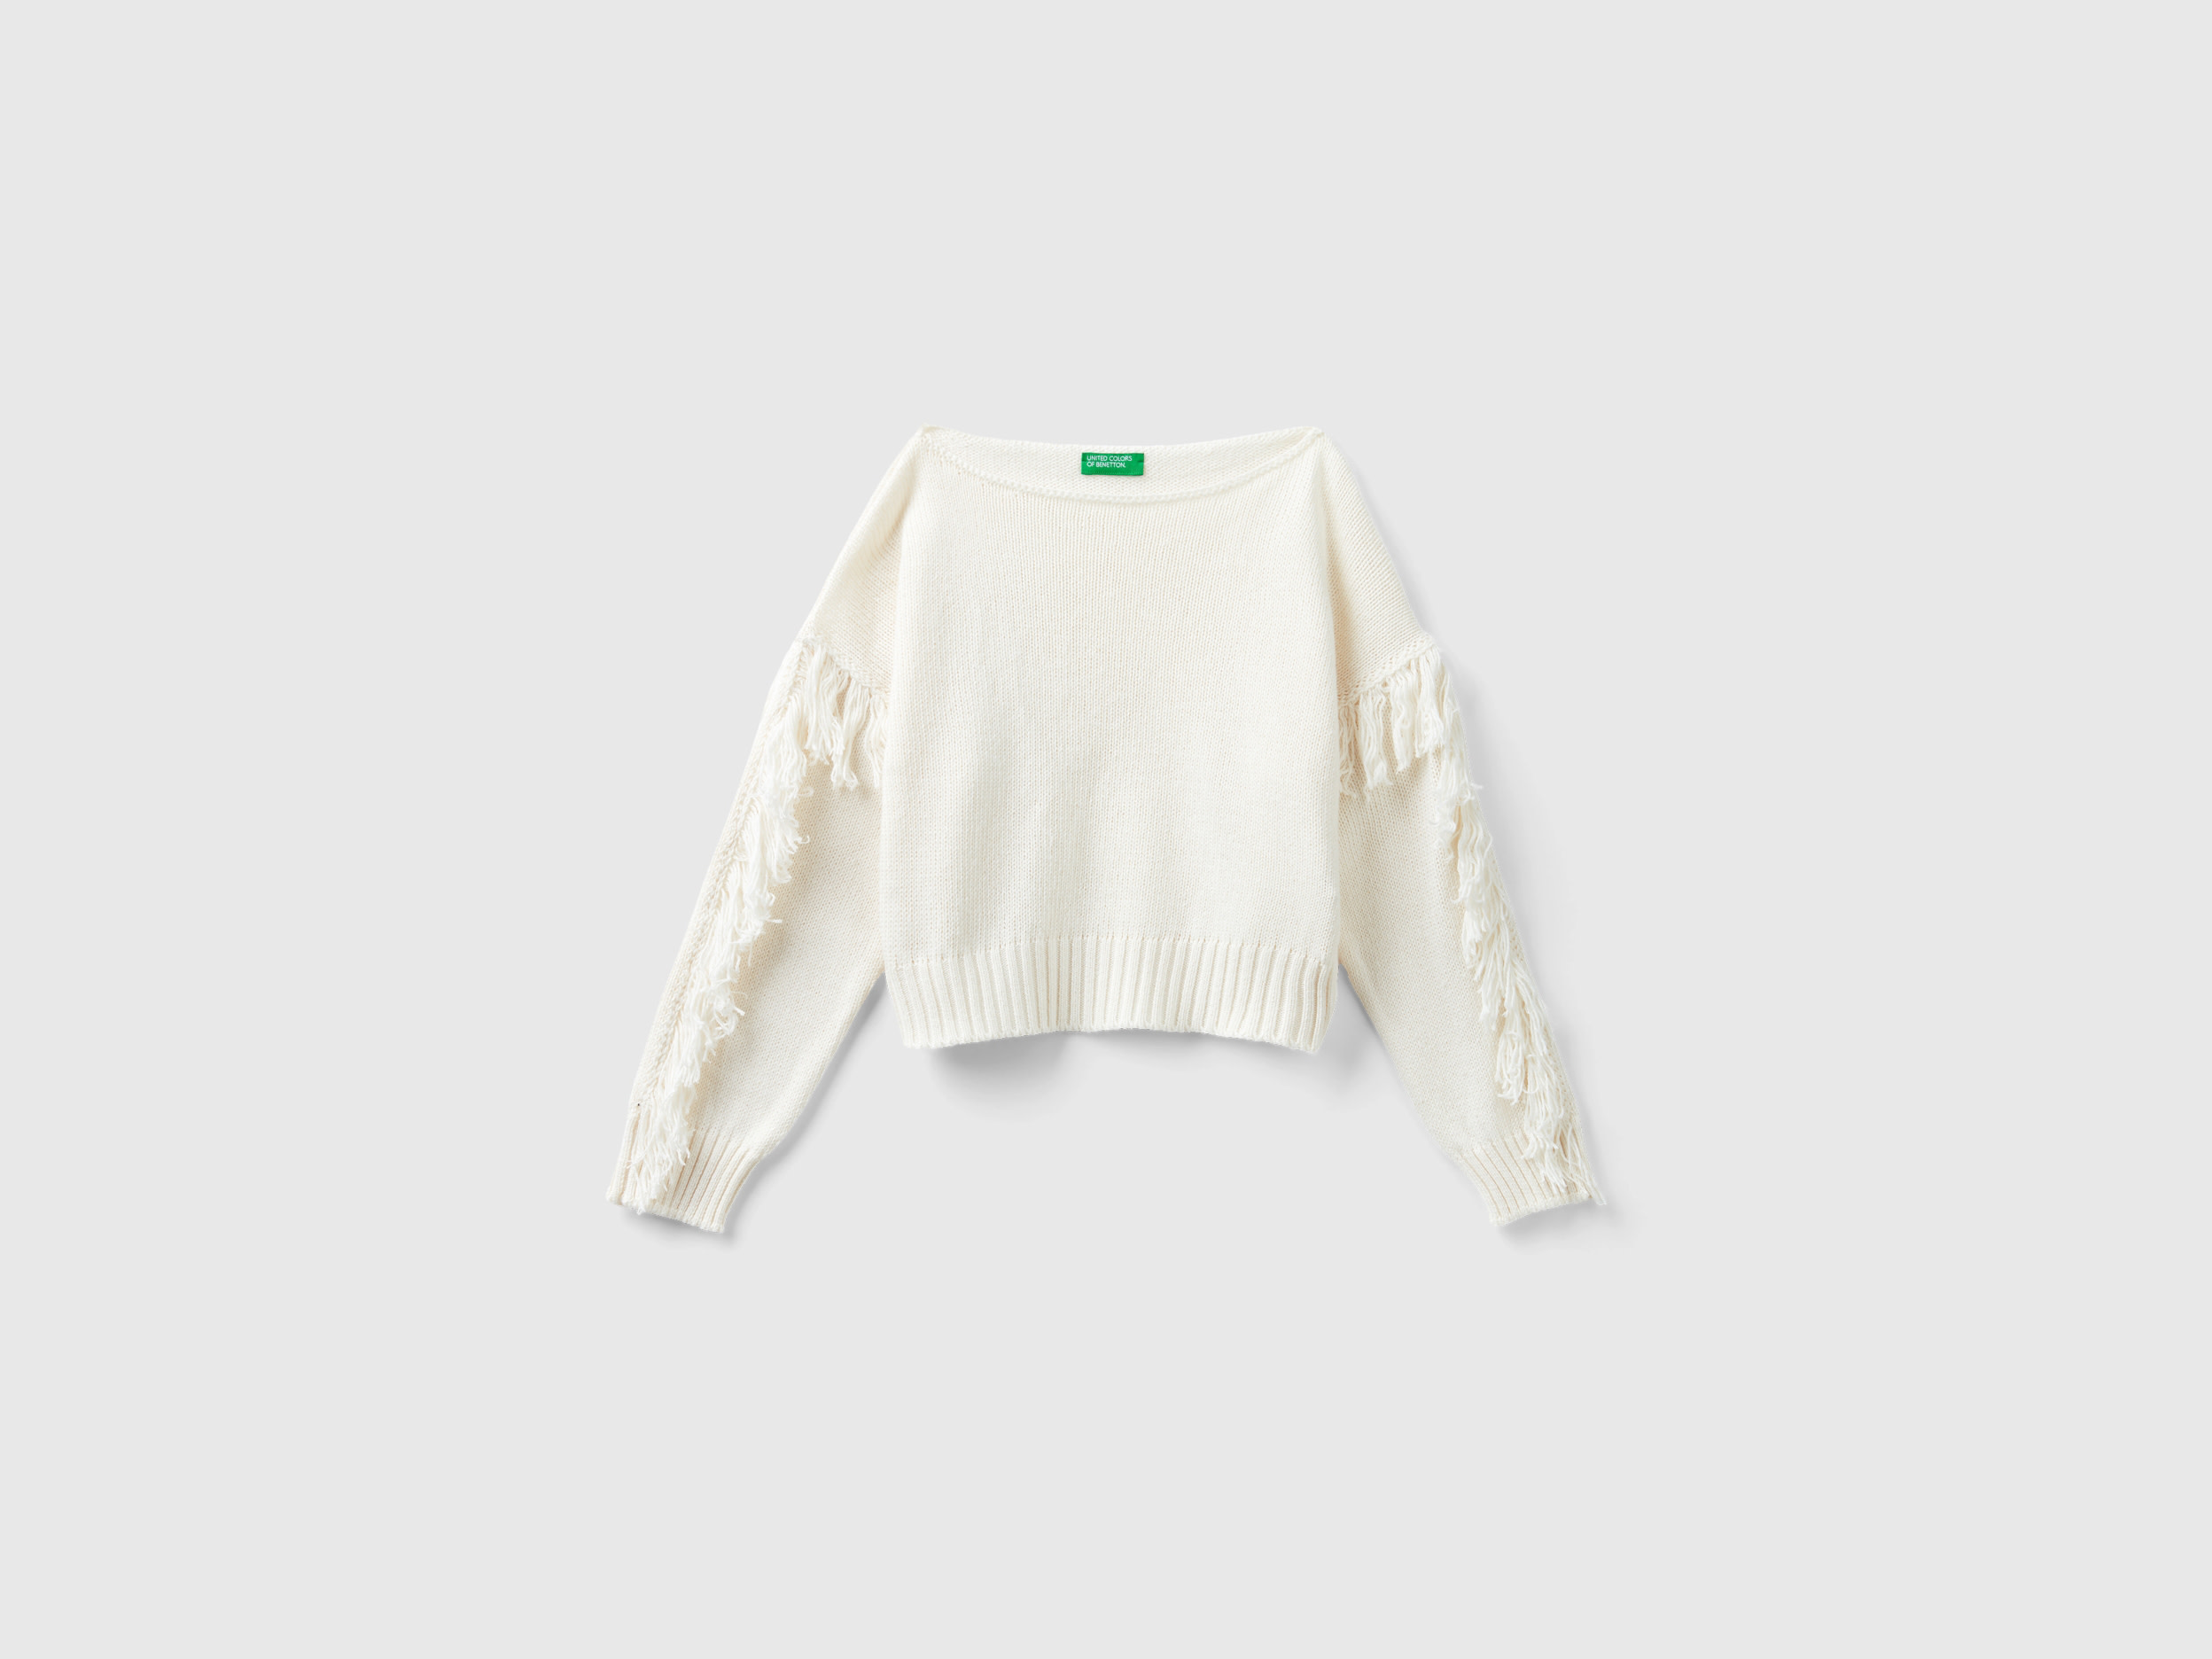 Image of Benetton, Sweater With Fringe, size 3XL, Creamy White, Kids